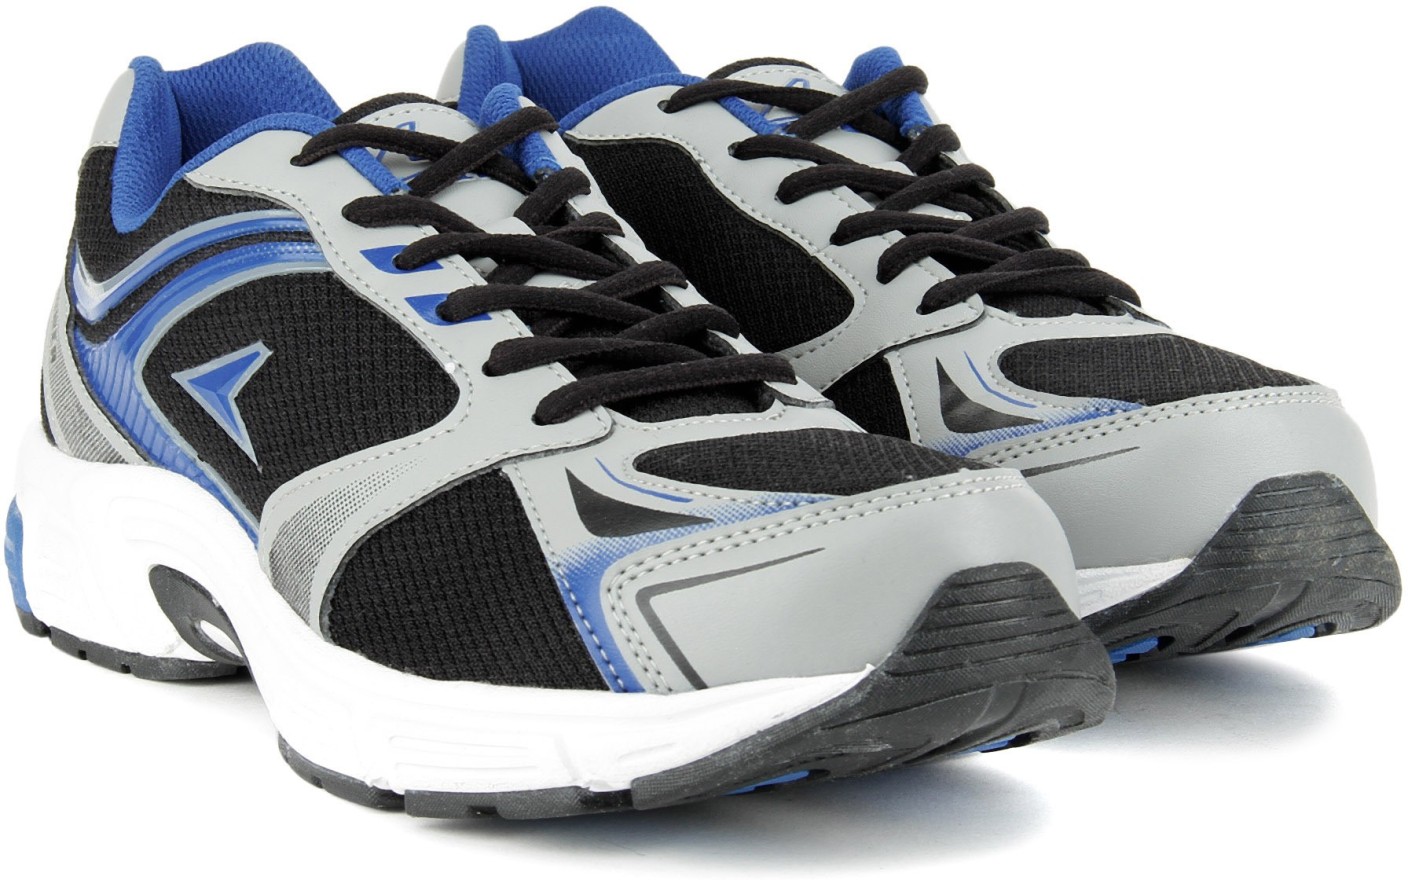 Bata PLAZMA Running Shoes For Men - Buy Grey Color Bata PLAZMA Running ...